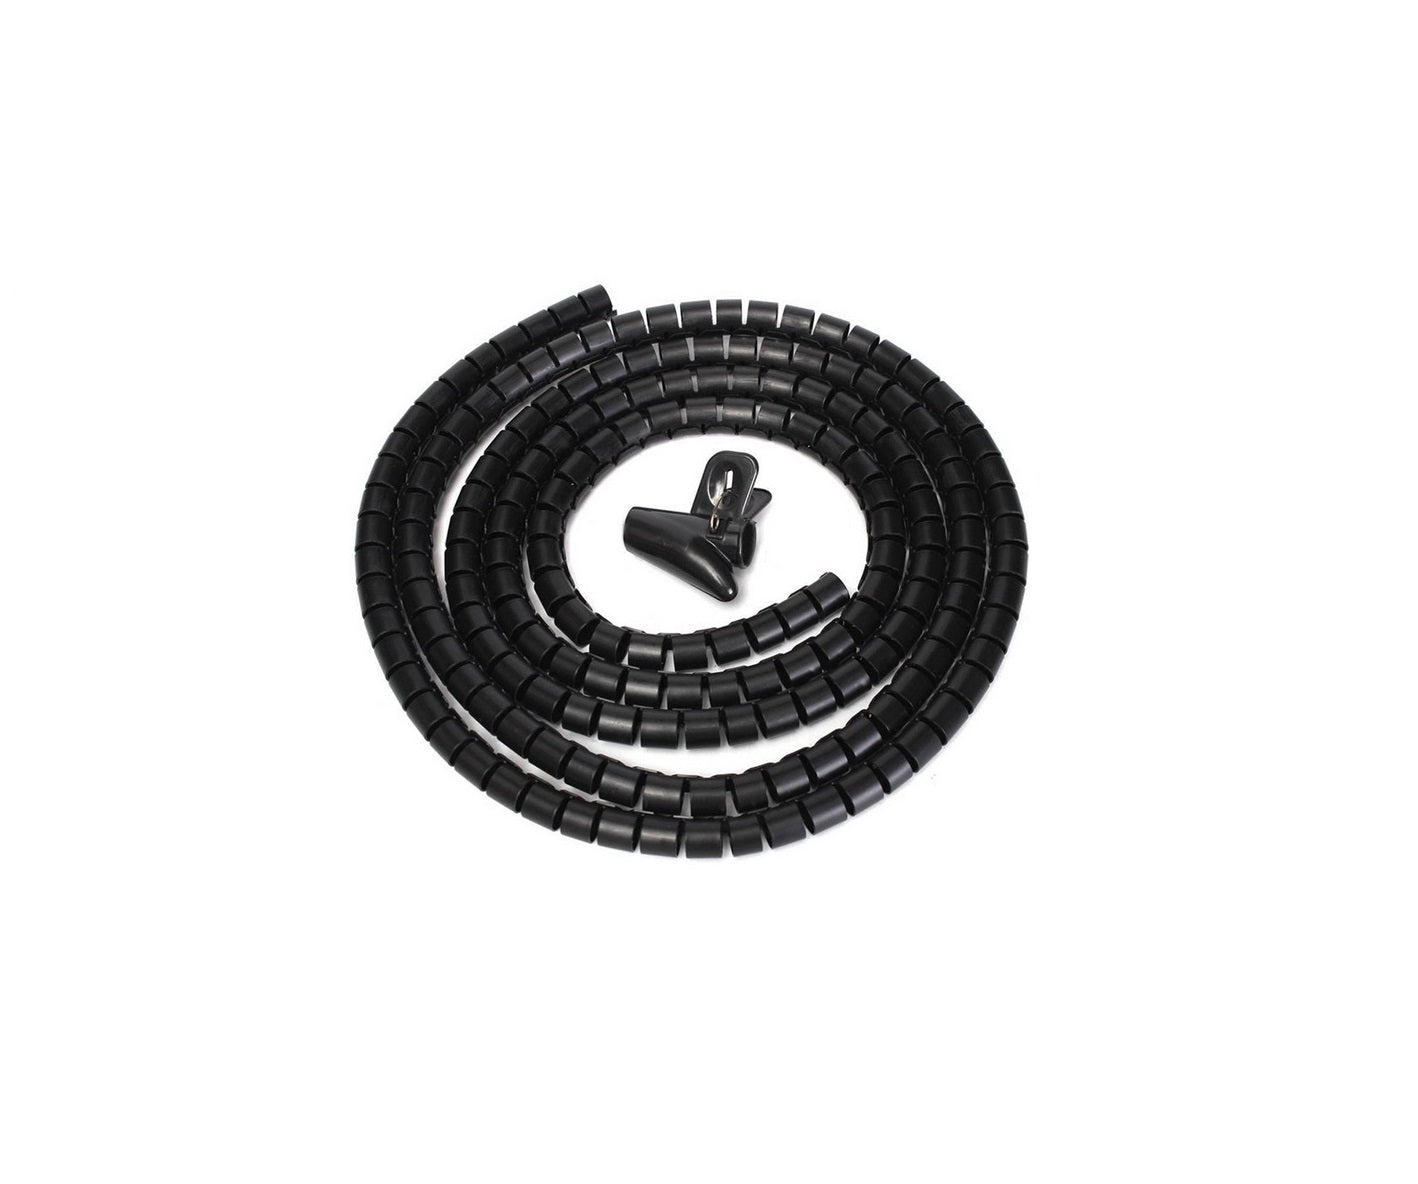 Flexible Spiral Cable Cord Power Wire Storage Management Organizer Wrap Clip